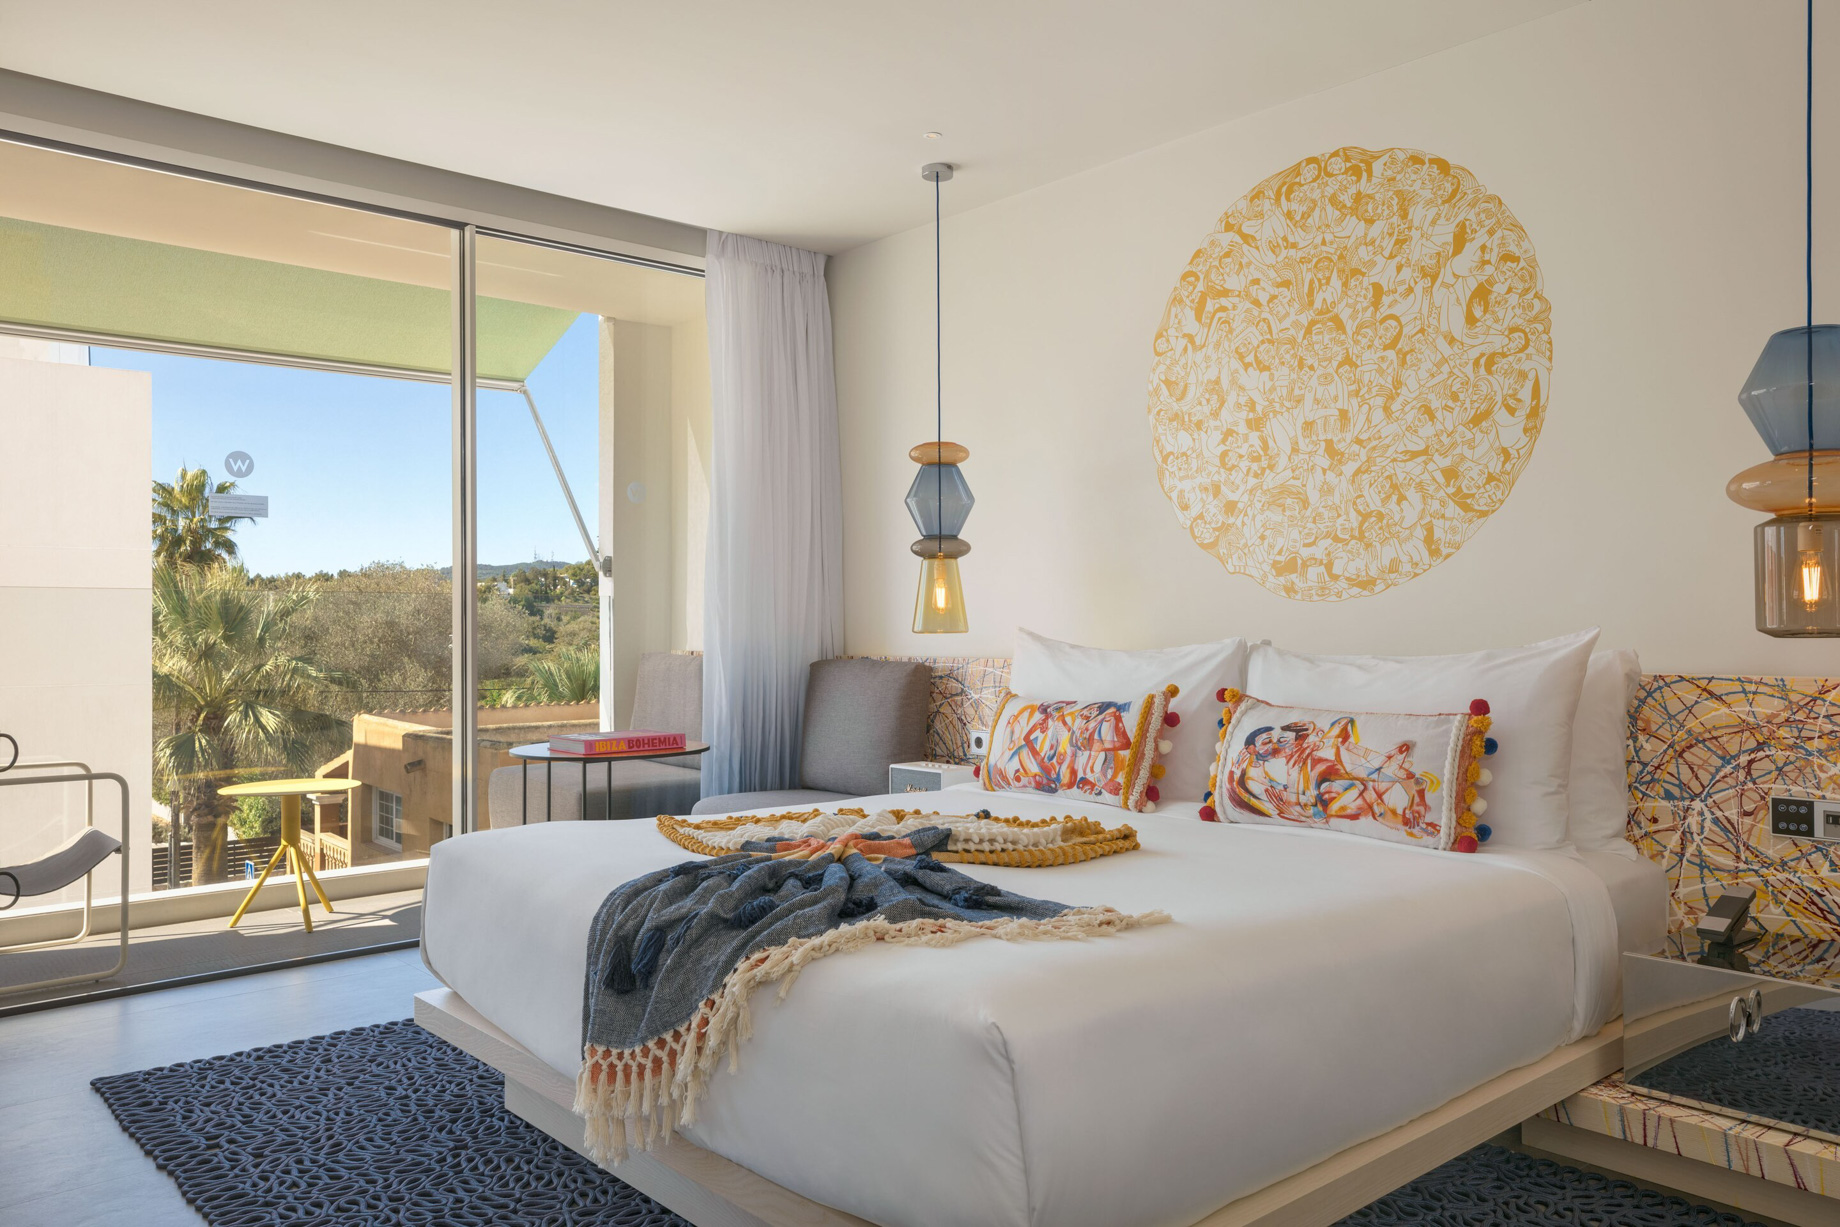 W Ibiza Hotel – Santa Eulalia del Rio, Spain – Wonderful King Guest Room